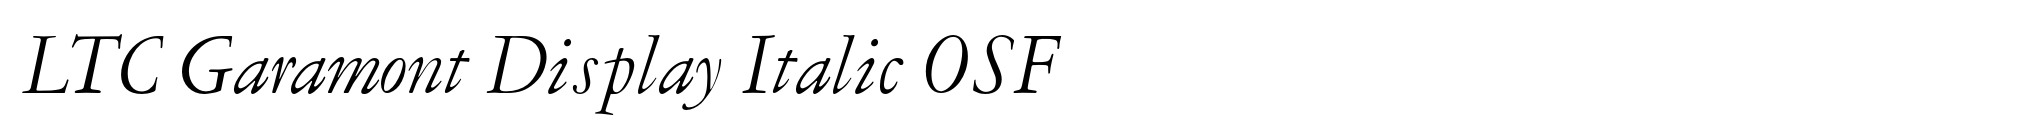 LTC Garamont Display Italic OSF image